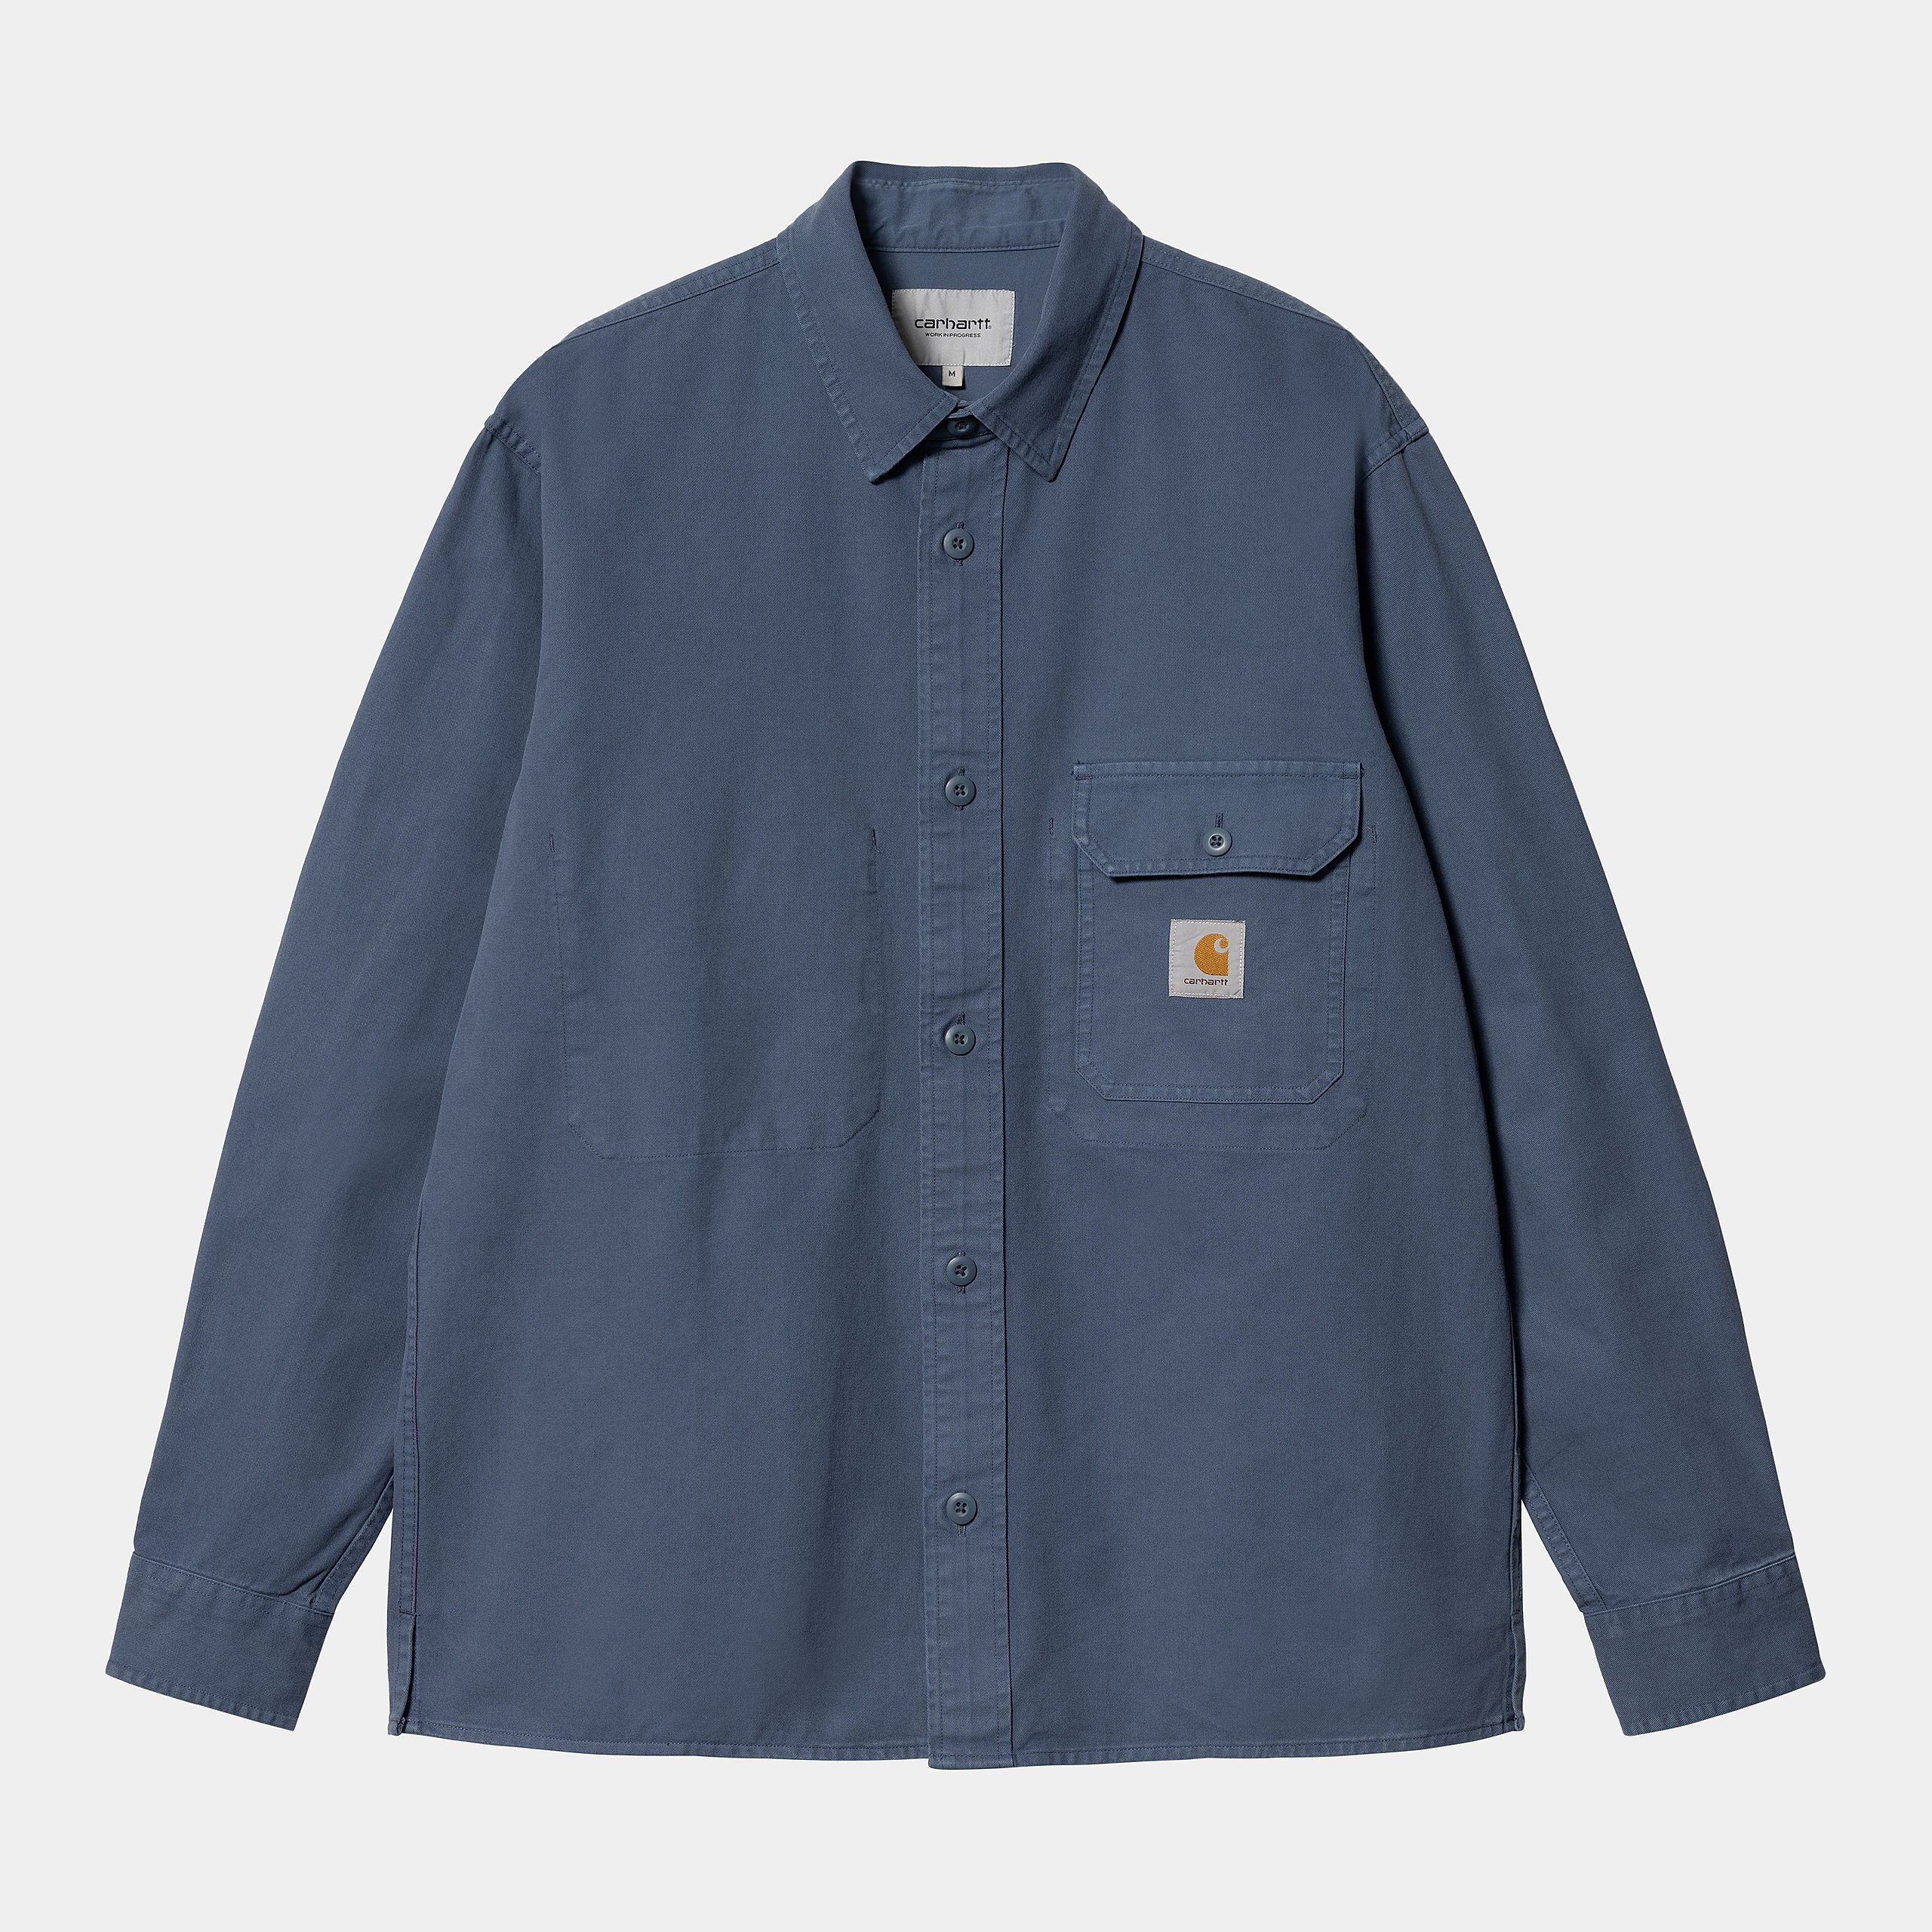 Carhartt WIP Mens Reno Shirt Jacket - Storm Blue